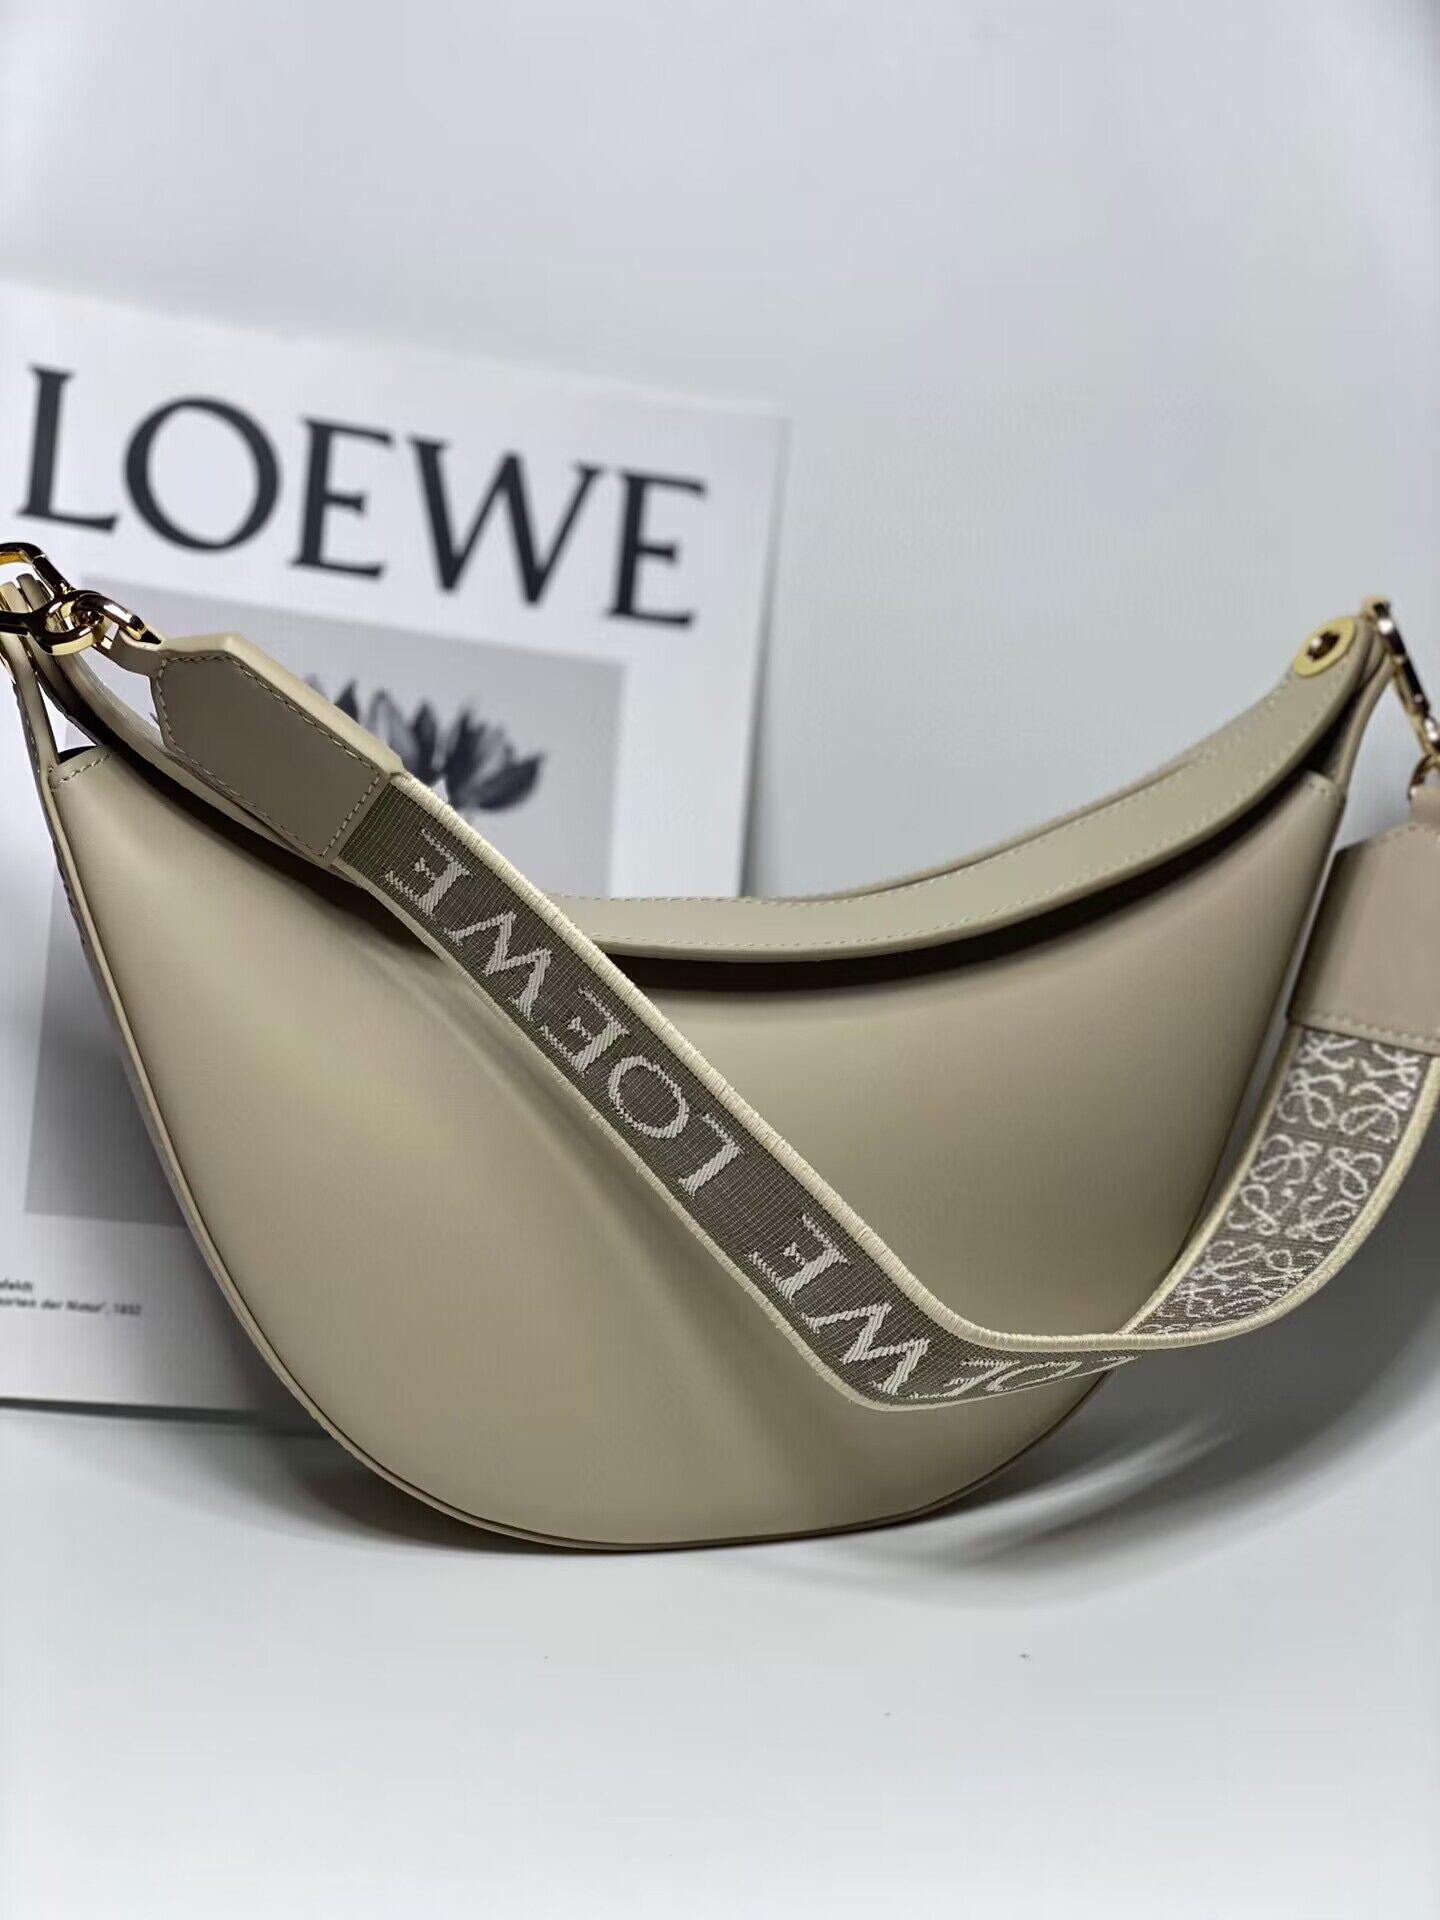 Loewe Original Leather Shoulder Handbag 3073 Gray